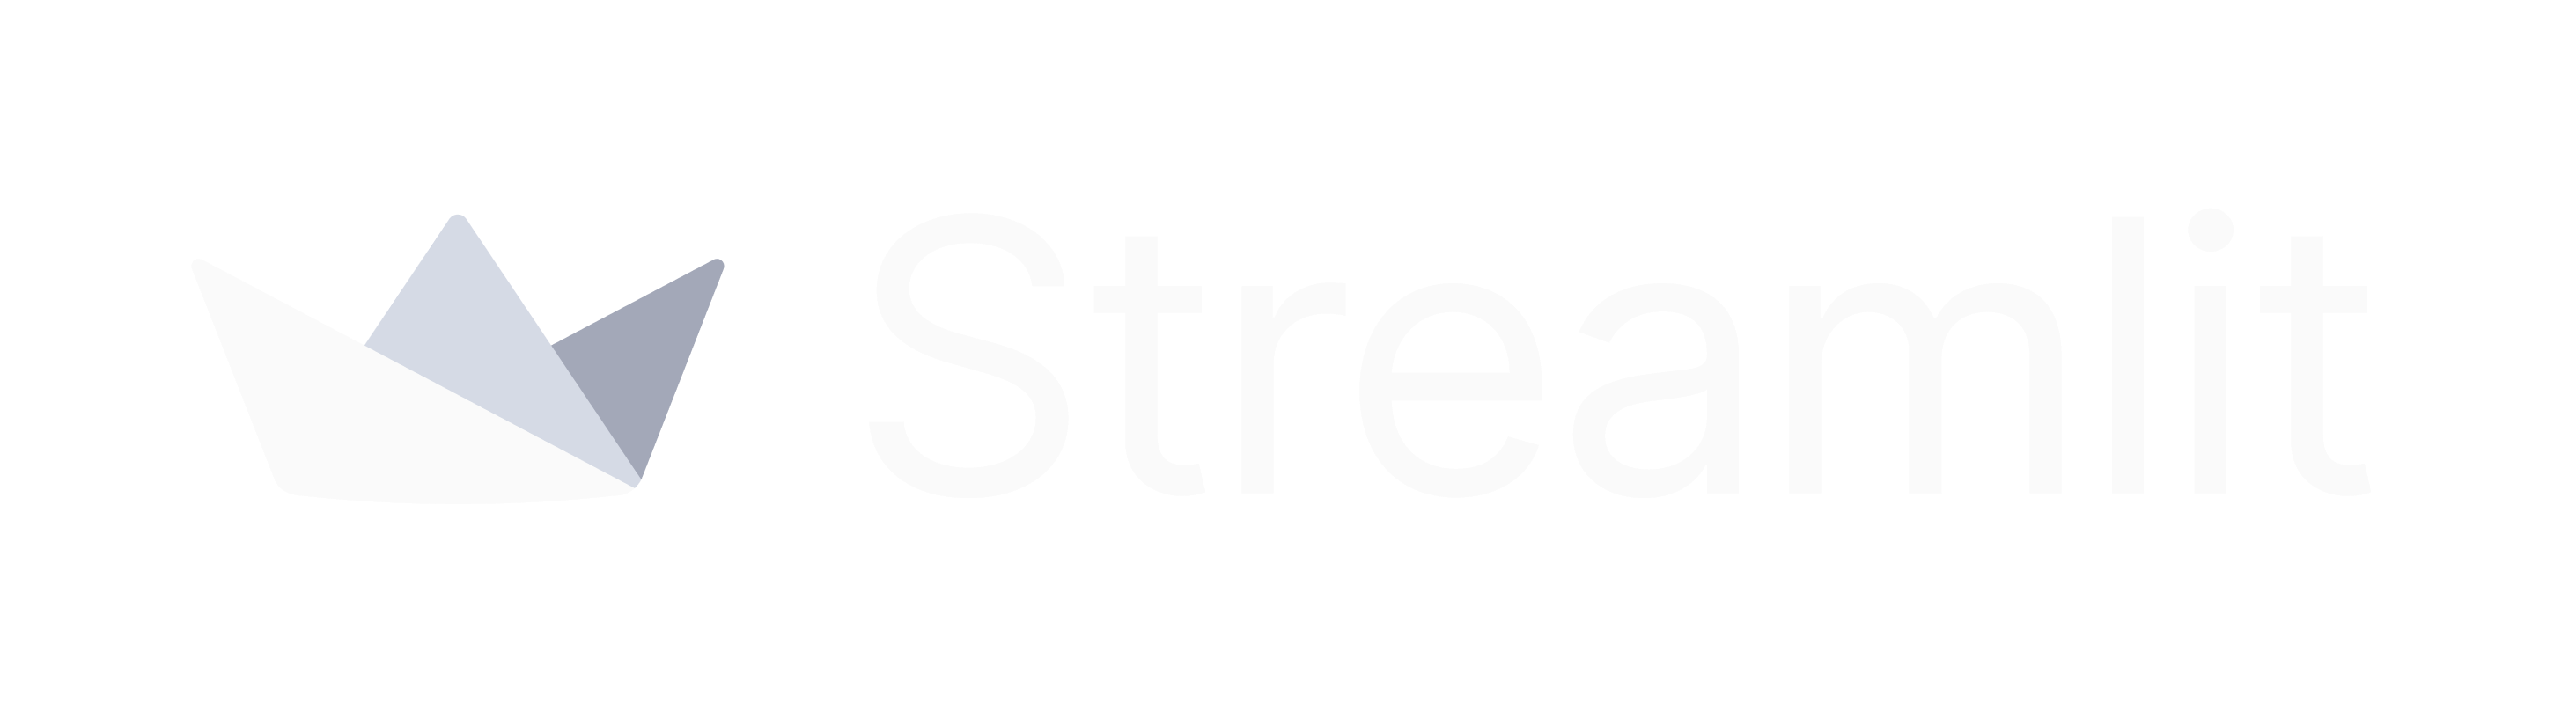 Streamlit light horizontal logo on dark background